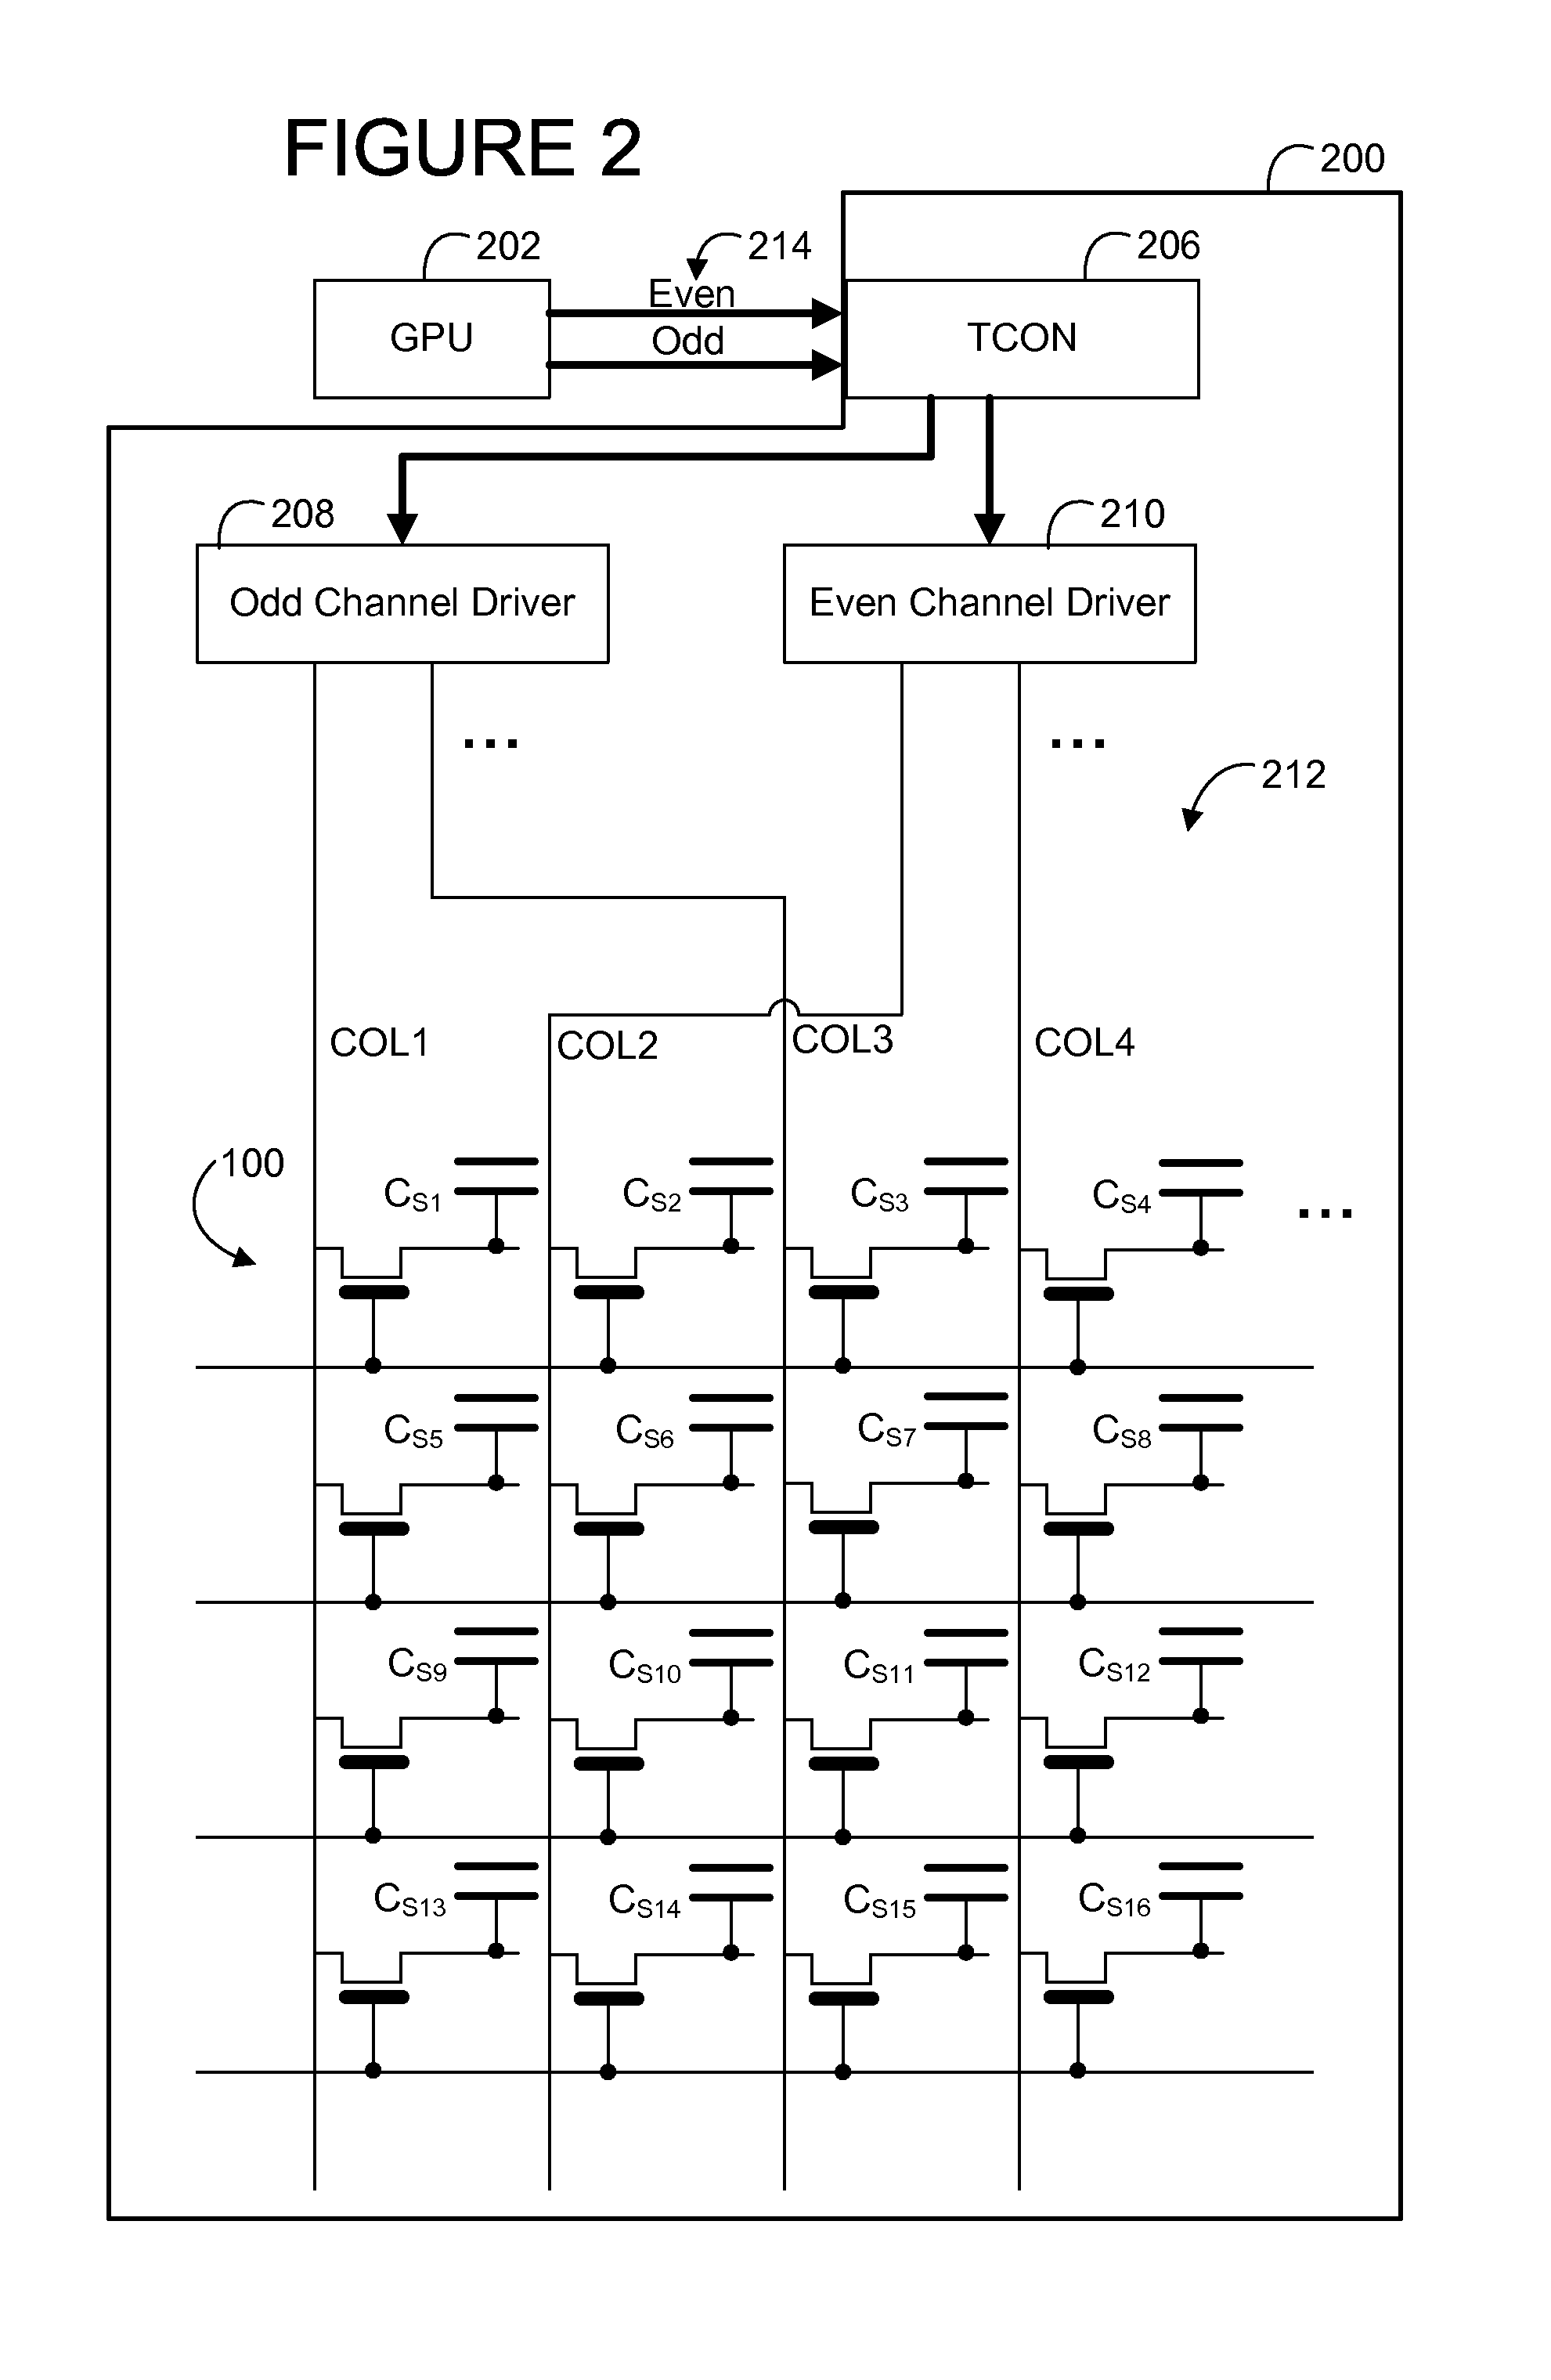 Method and apparatus to reduce panel power through horizontal interlaced addressing